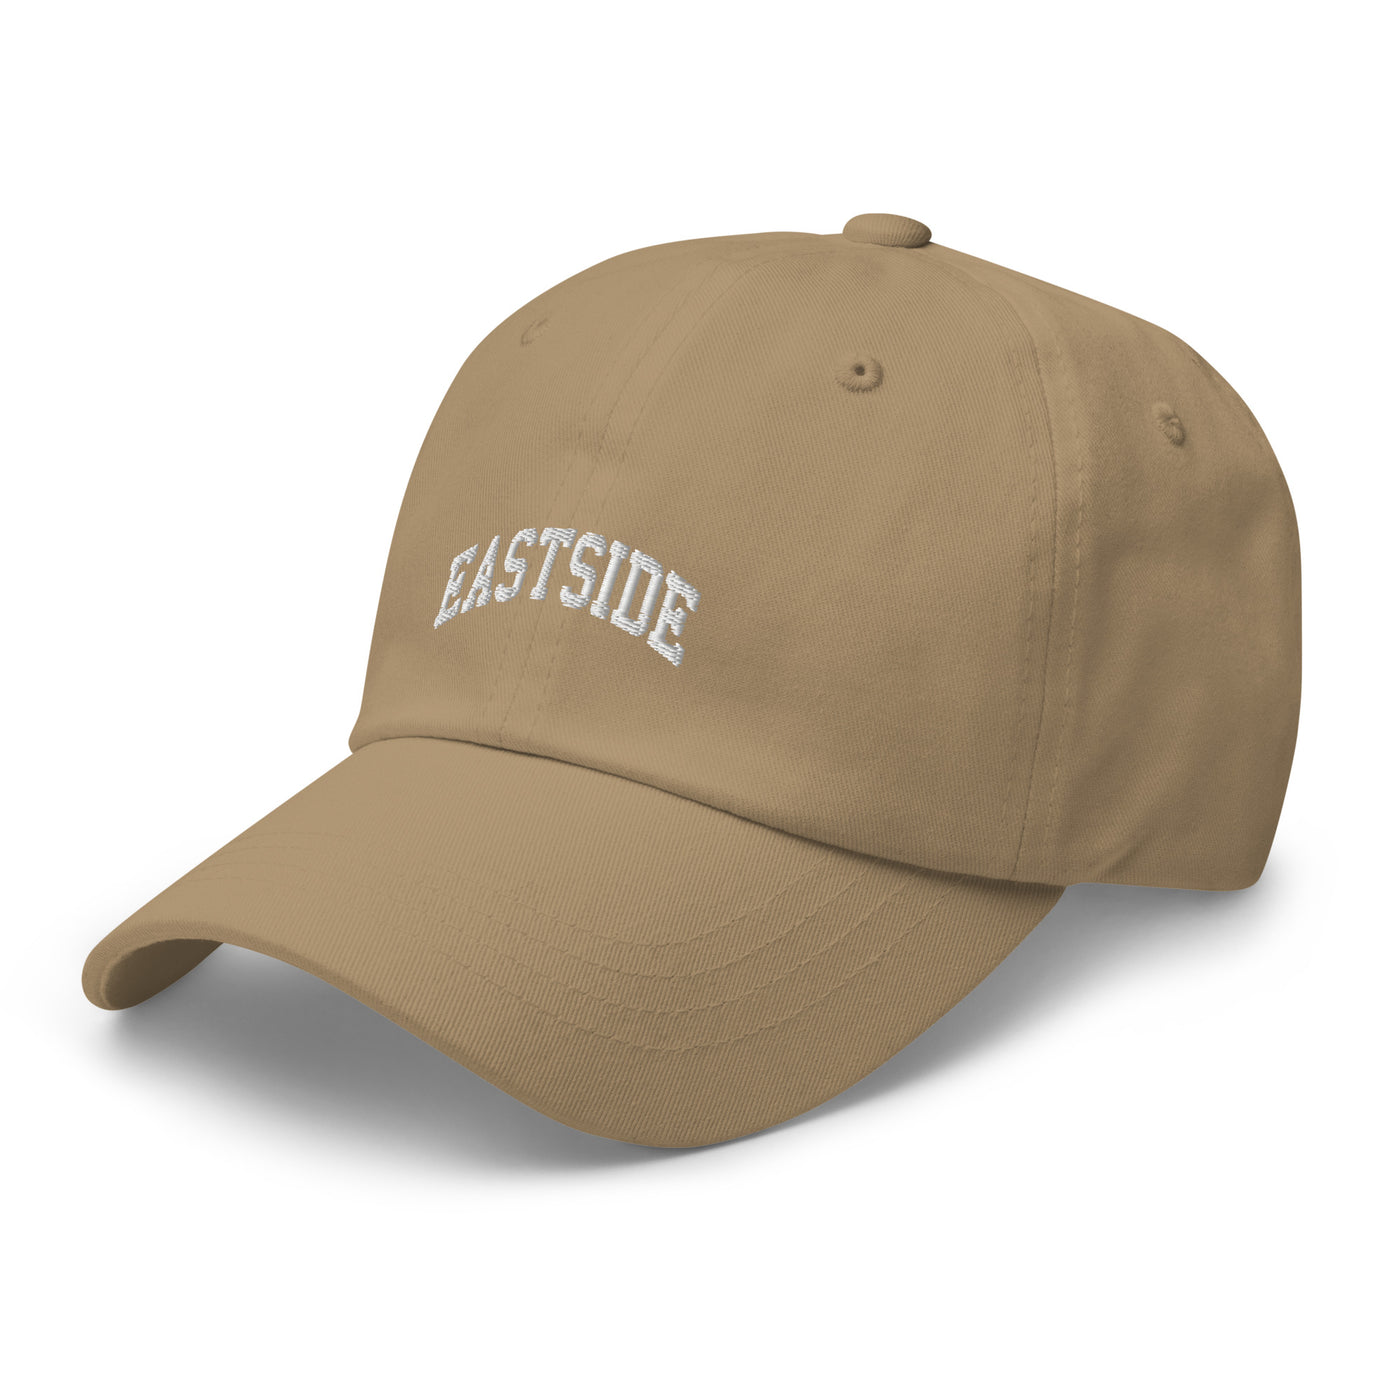 EASTSIDE unisex hat